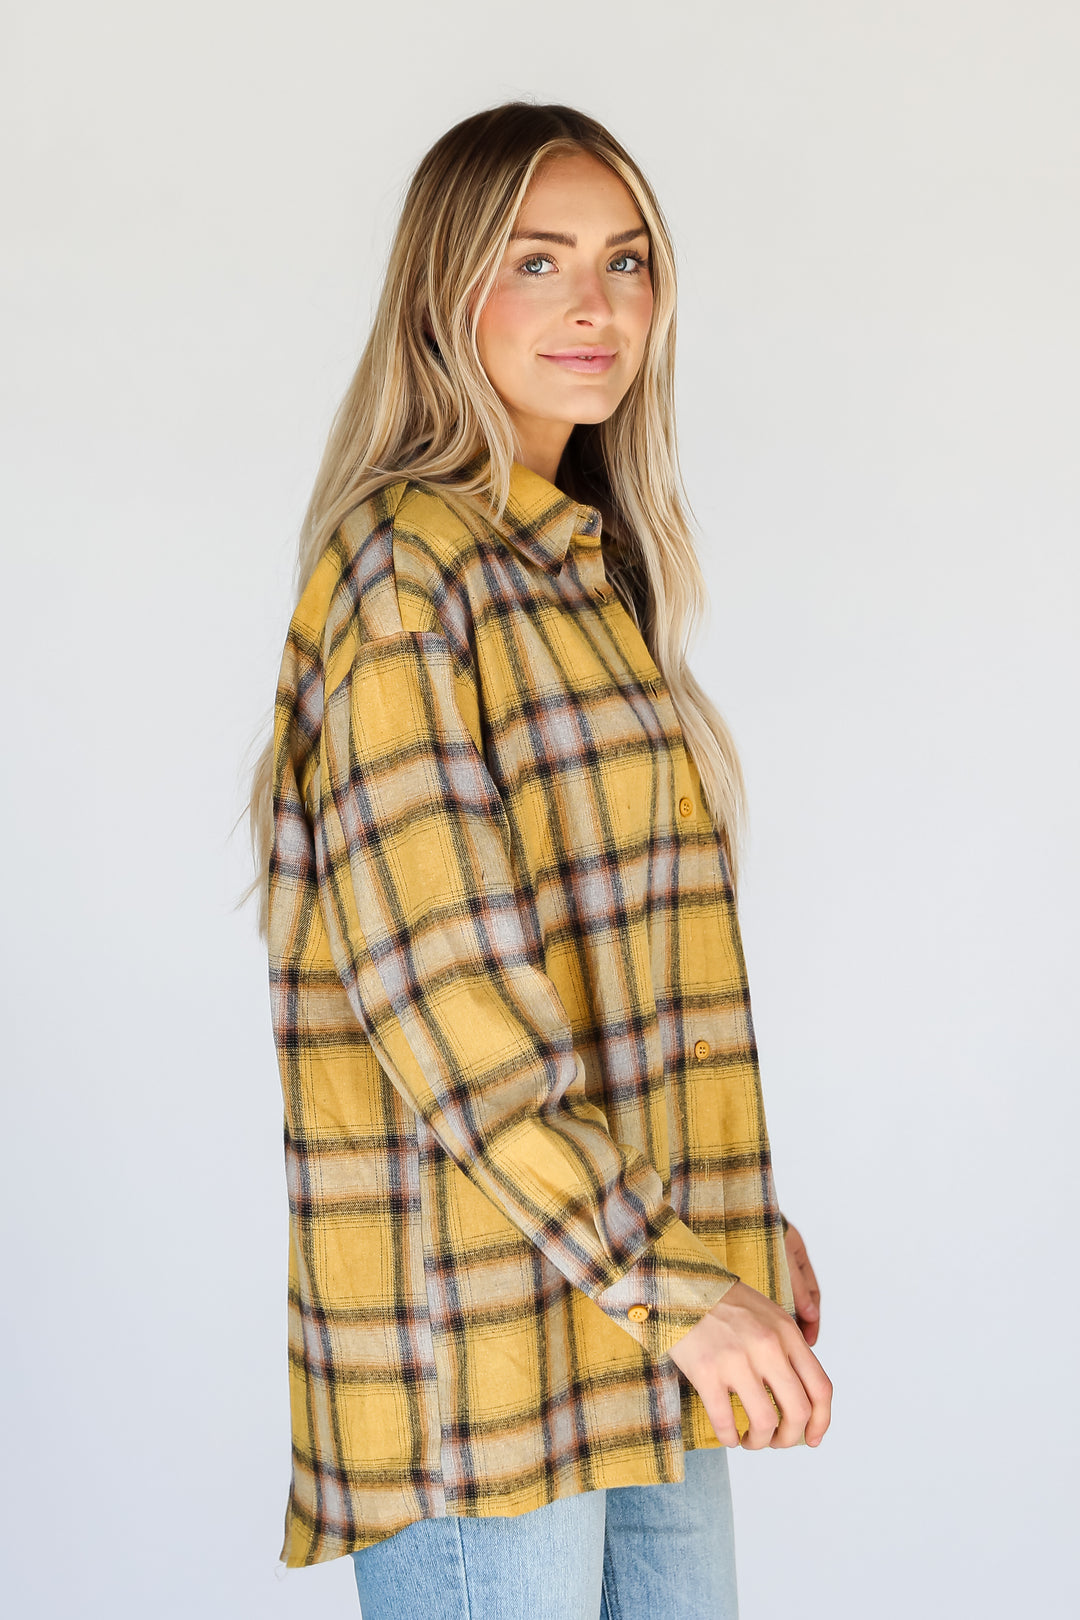 fall flannels for women